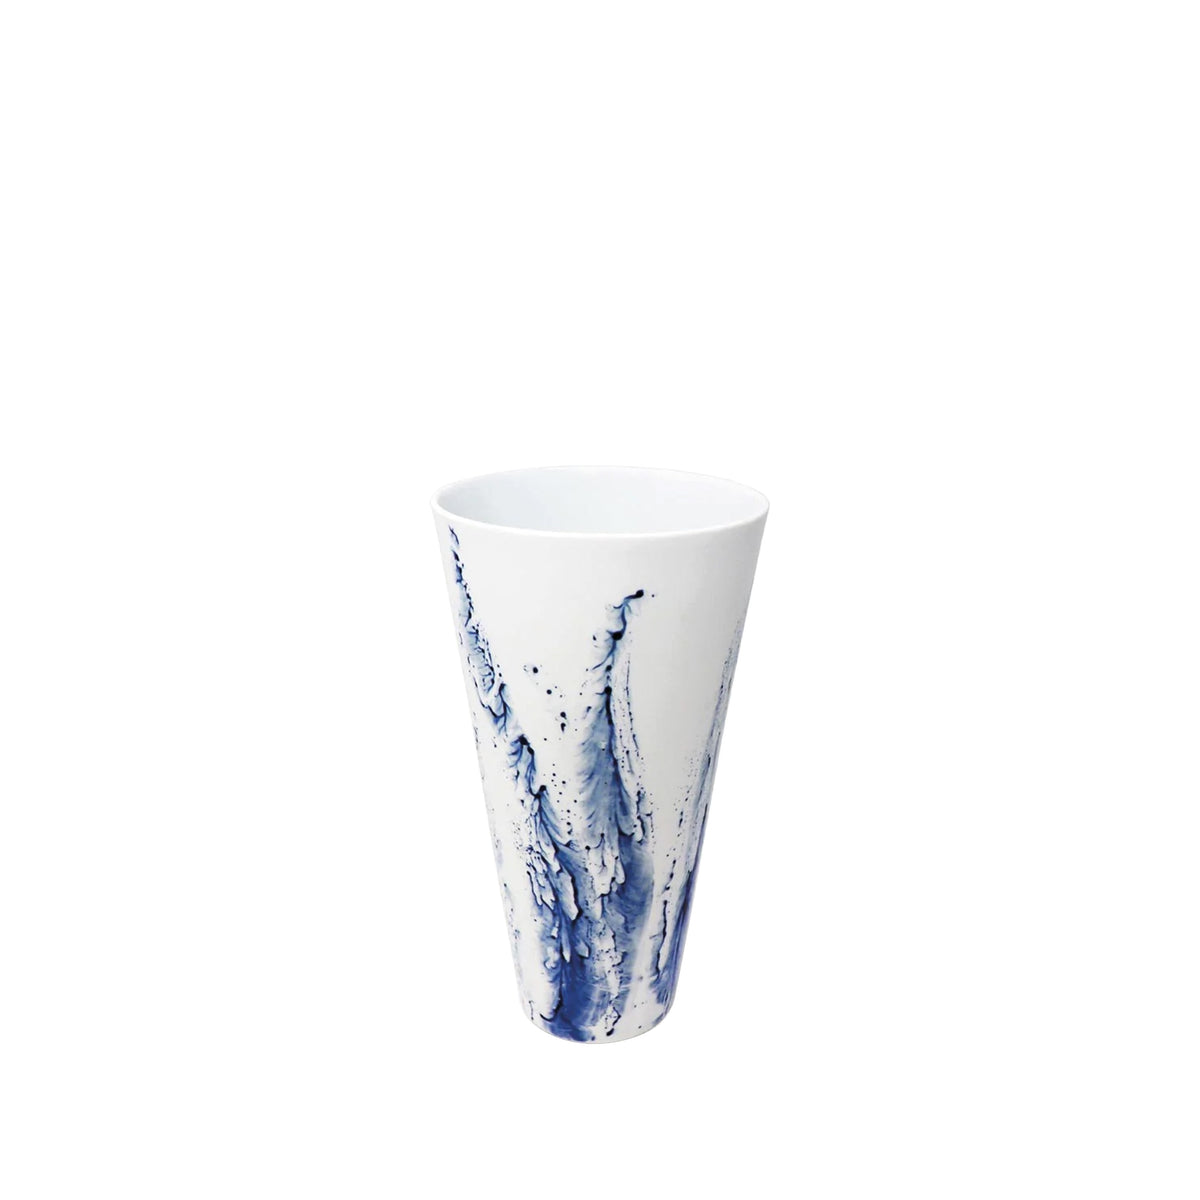 BLUE IMPRESSION - Straight vase, small